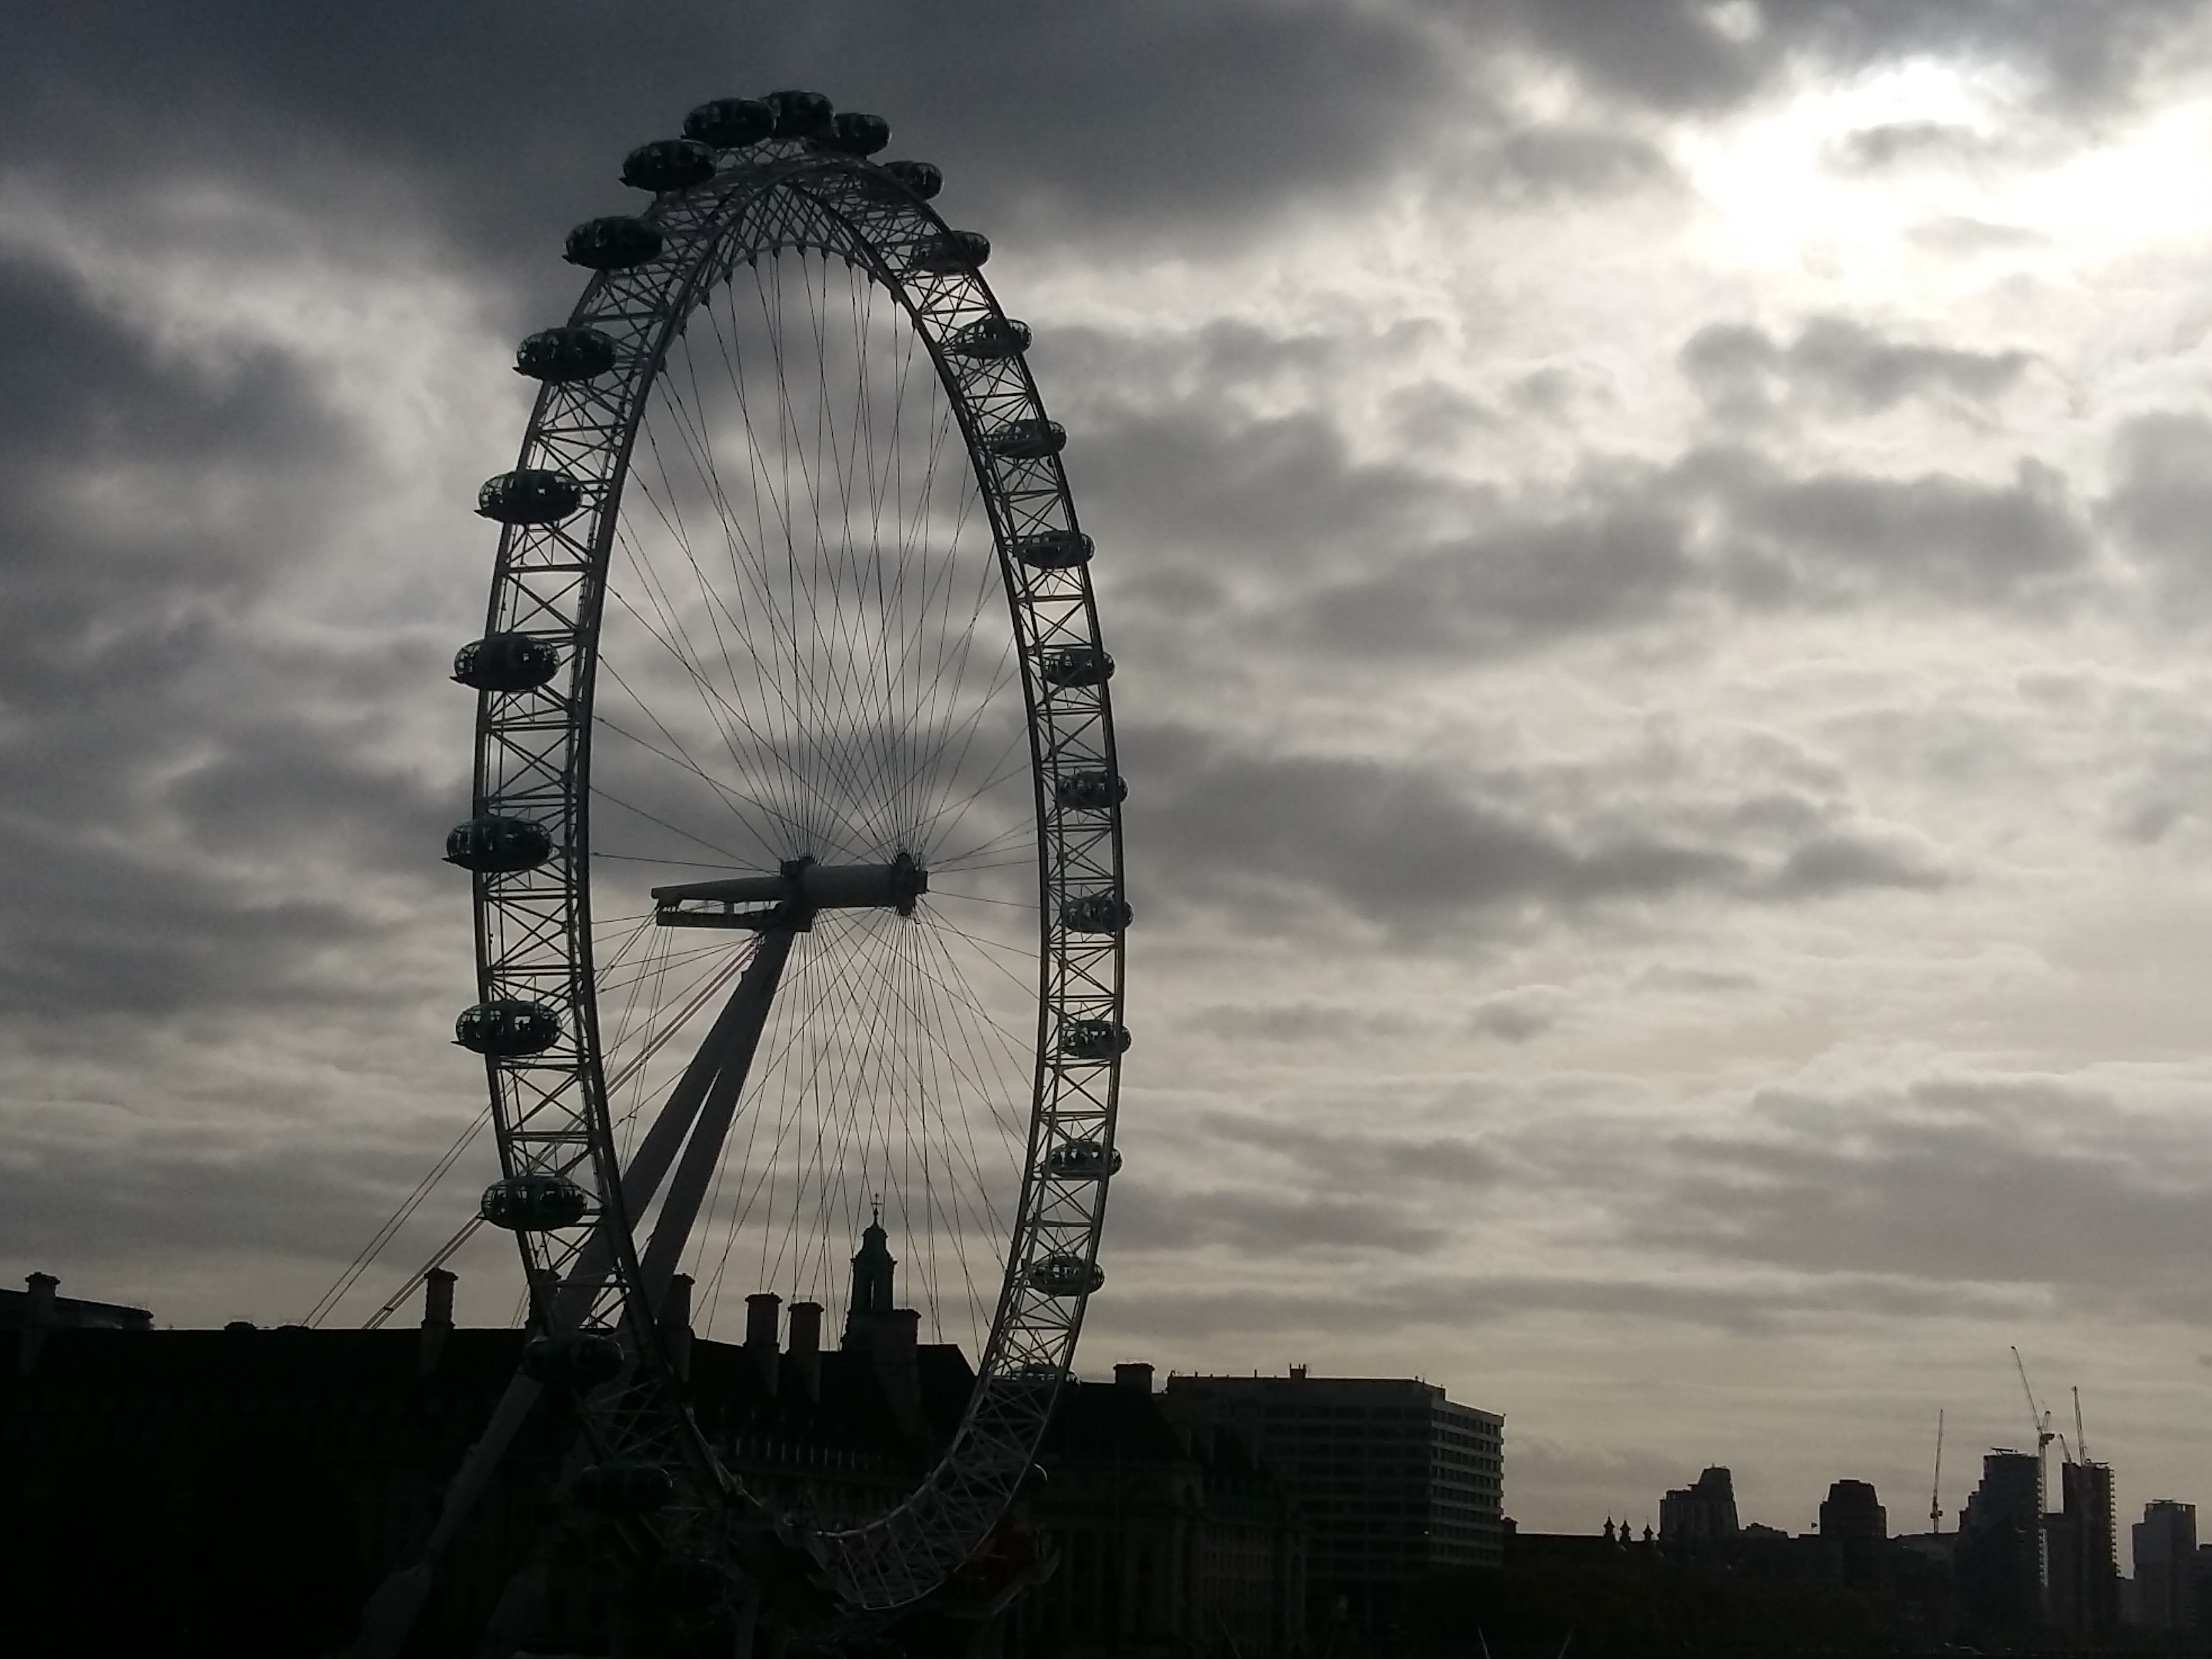 London Eye, it was cloudy - Album on Imgur